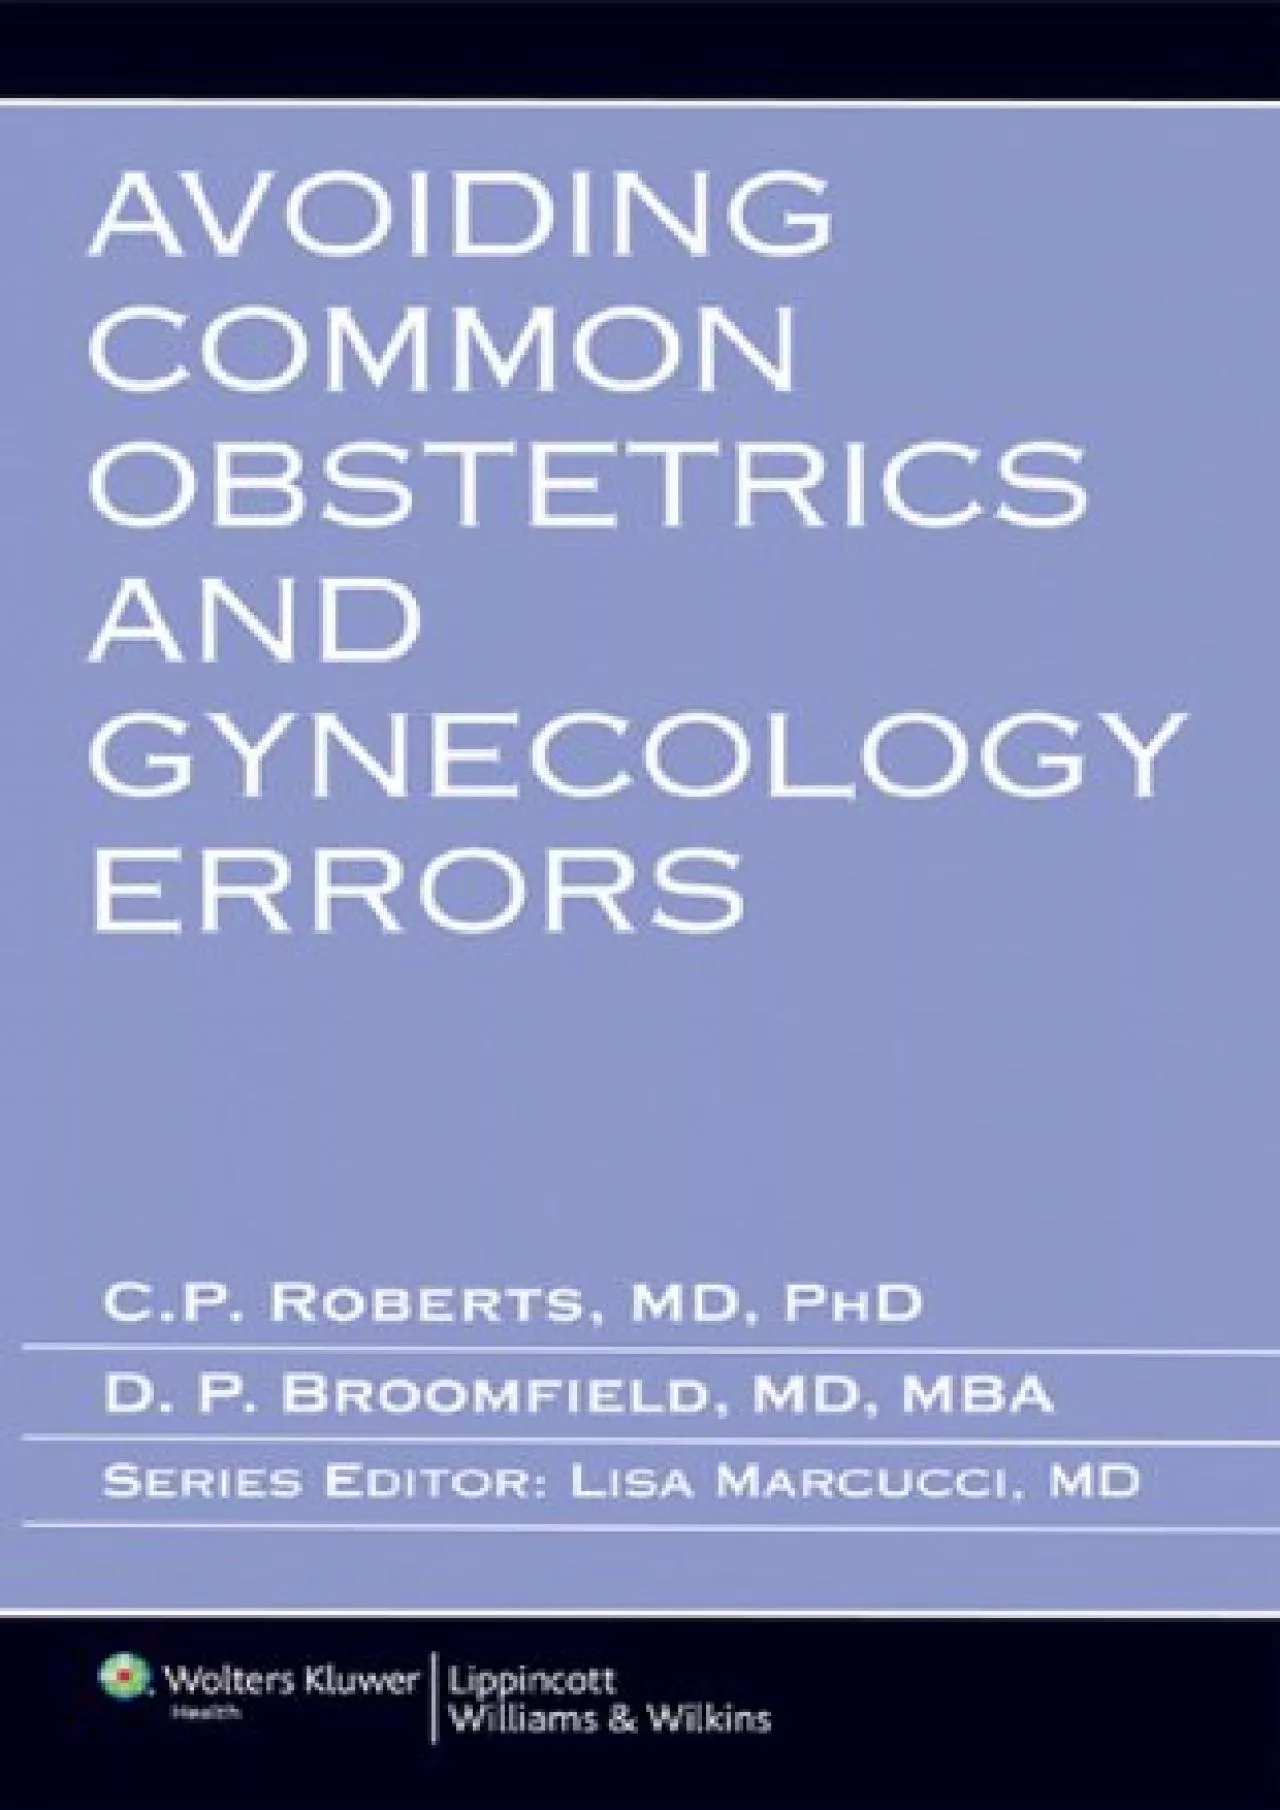 (BOOK)-Avoiding Common Obstetrics and Gynecology Errors (Avoiding Common Errors)